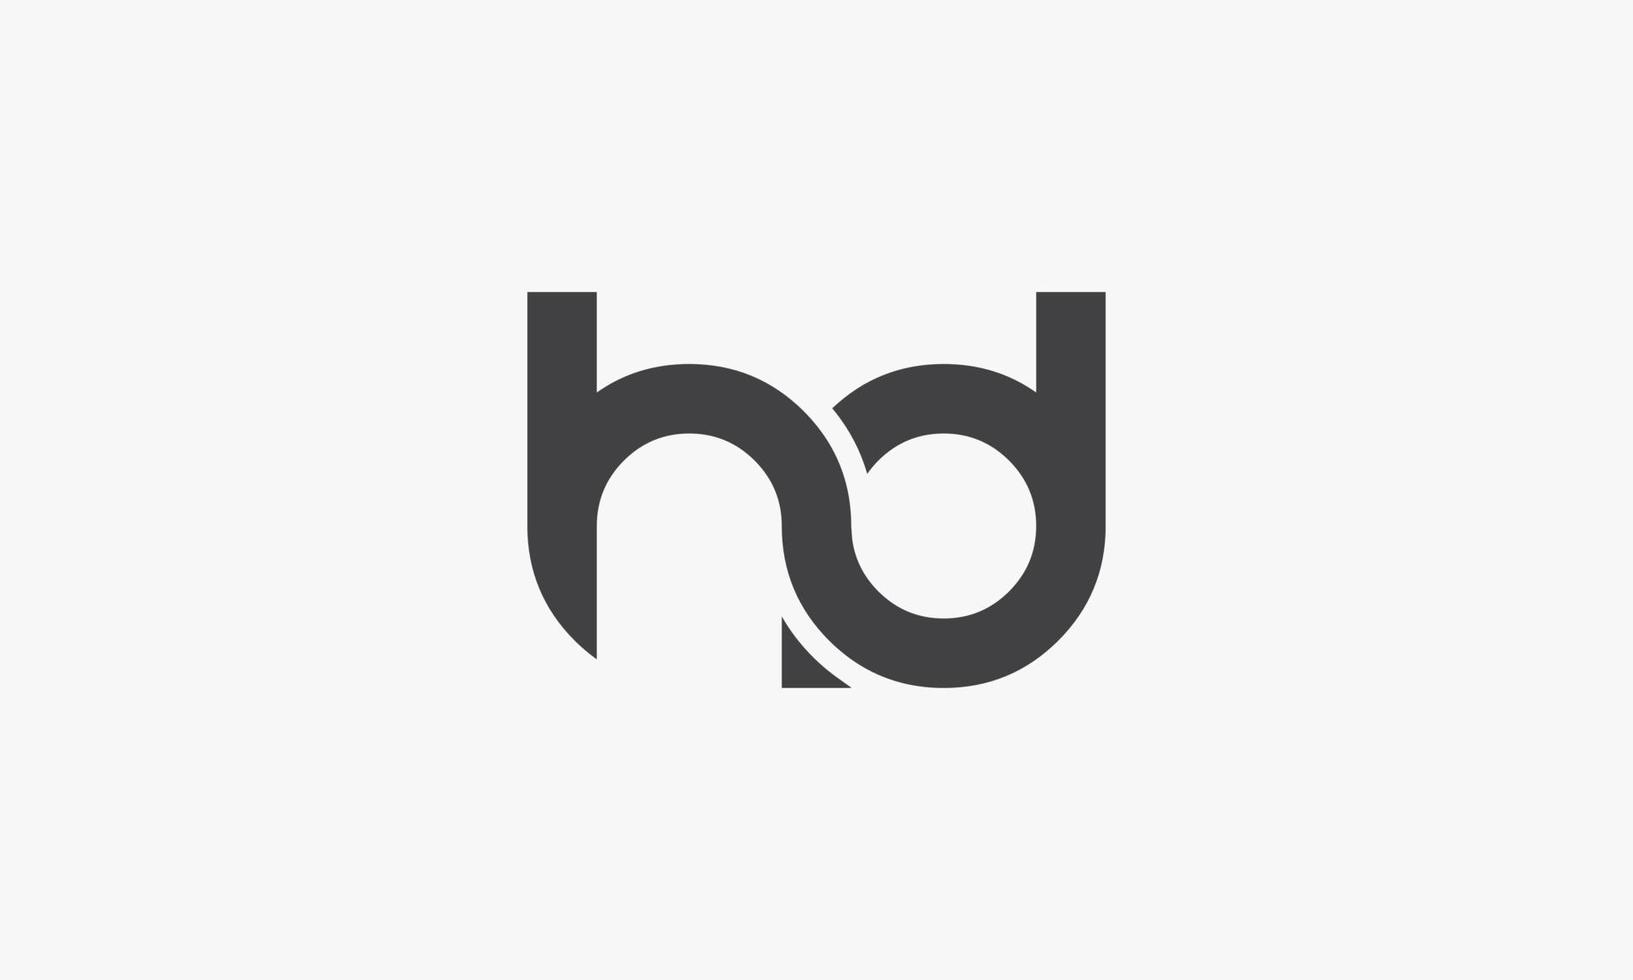 Logotipo de letra minúscula hd aislado sobre fondo blanco. vector